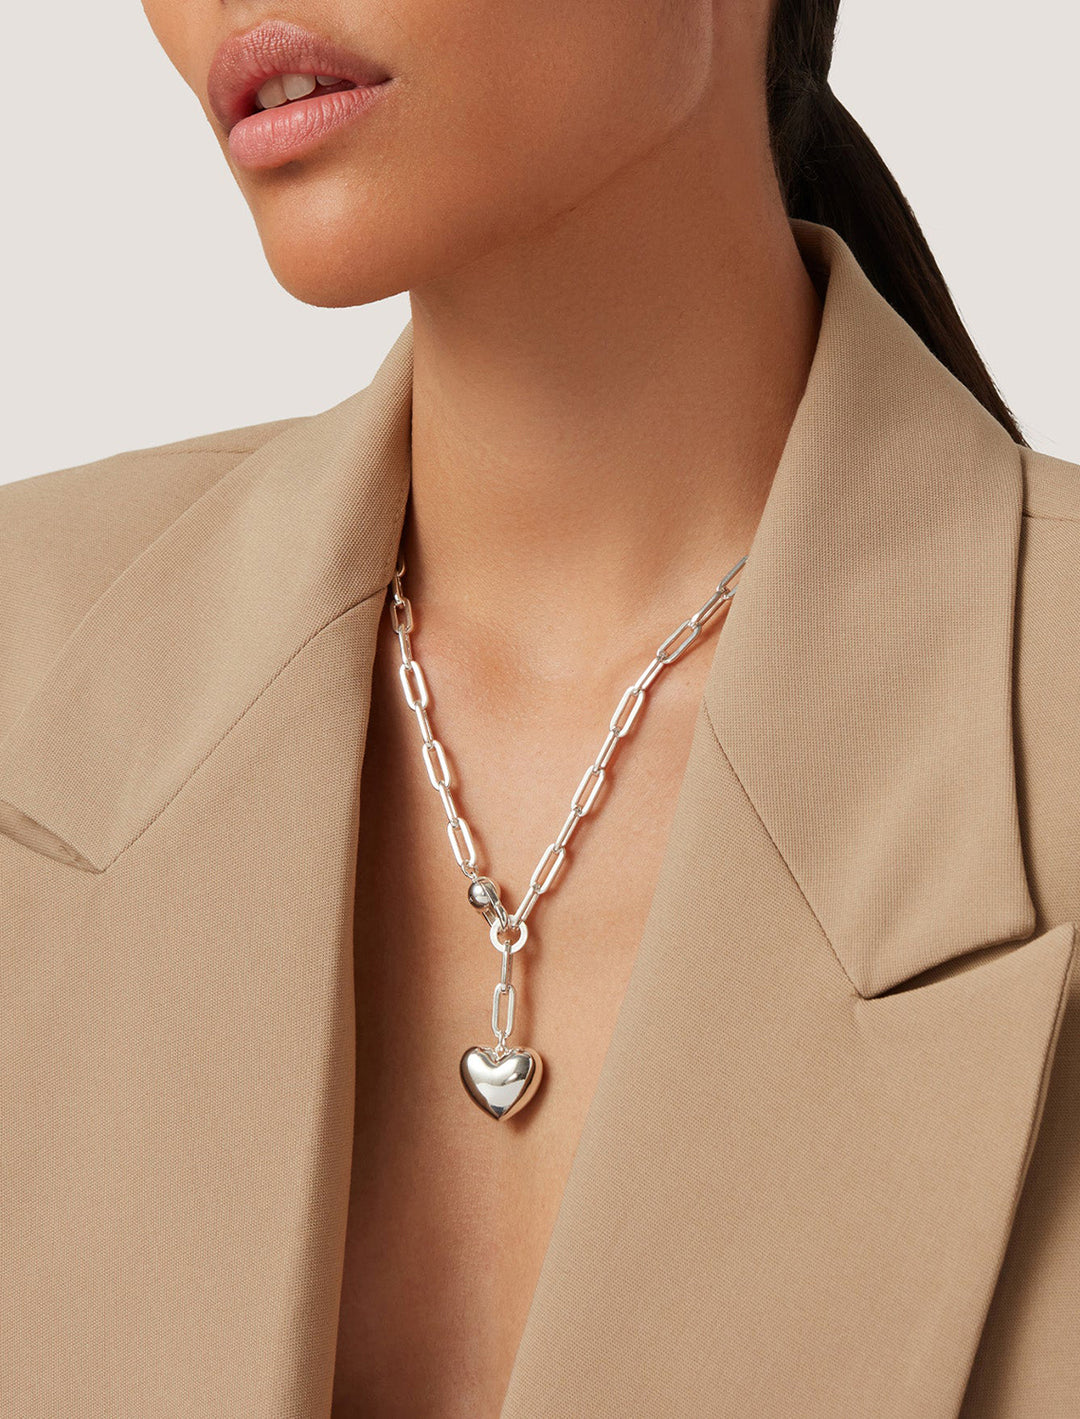 Model wearing Jenny Bird's puffy heart chain necklace in silver.